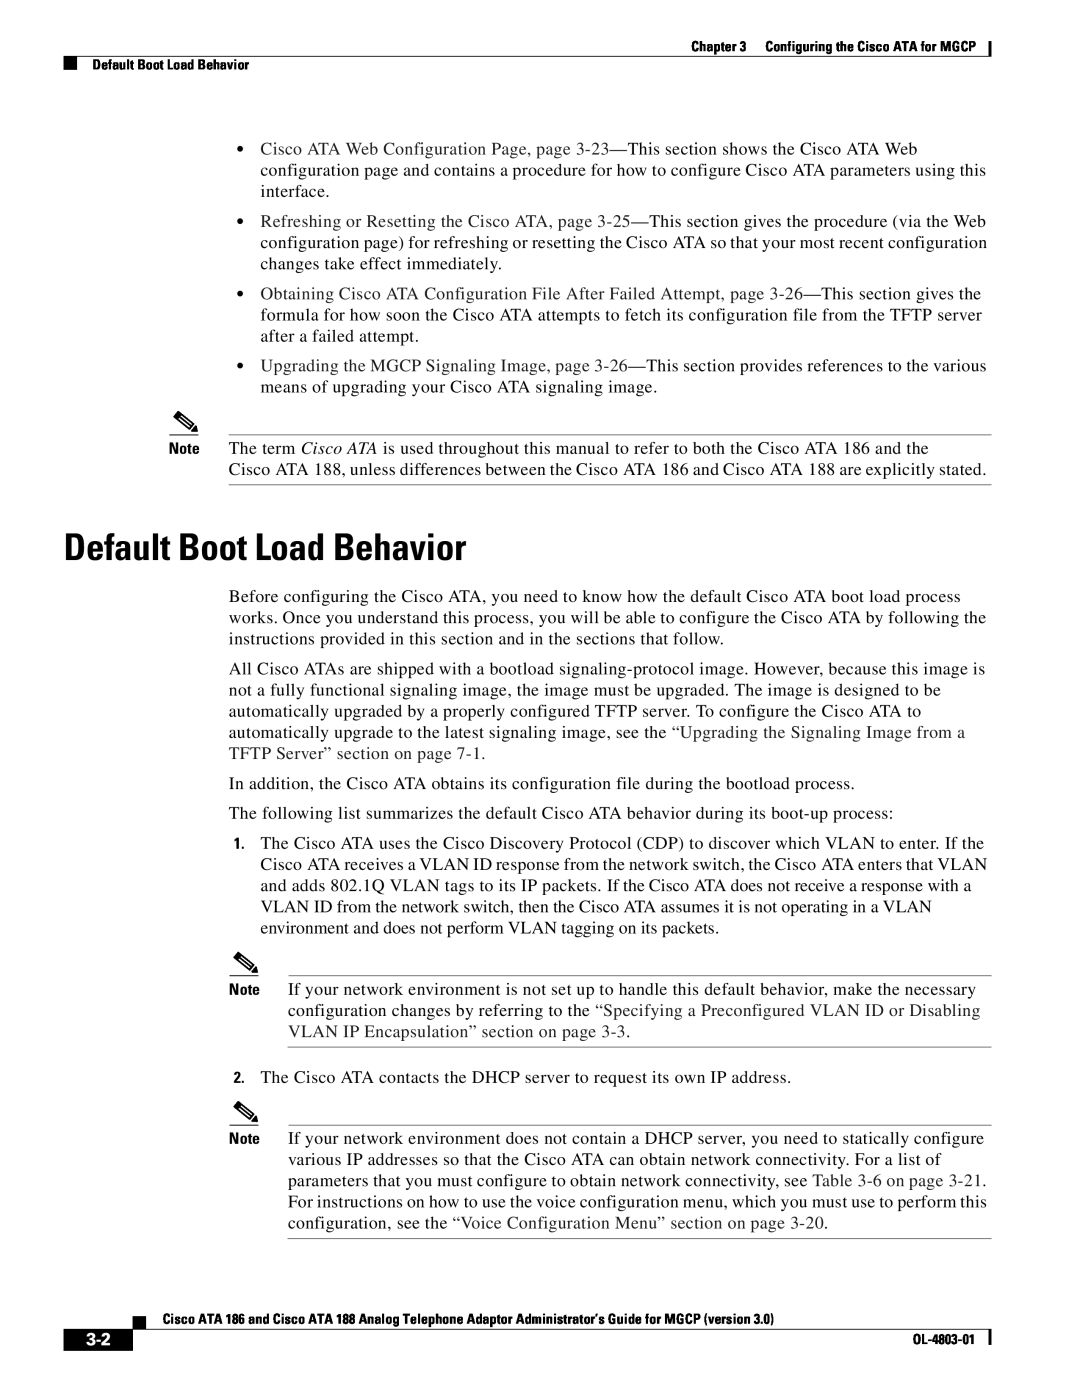 Cisco Systems ATA 186 manual Default Boot Load Behavior 